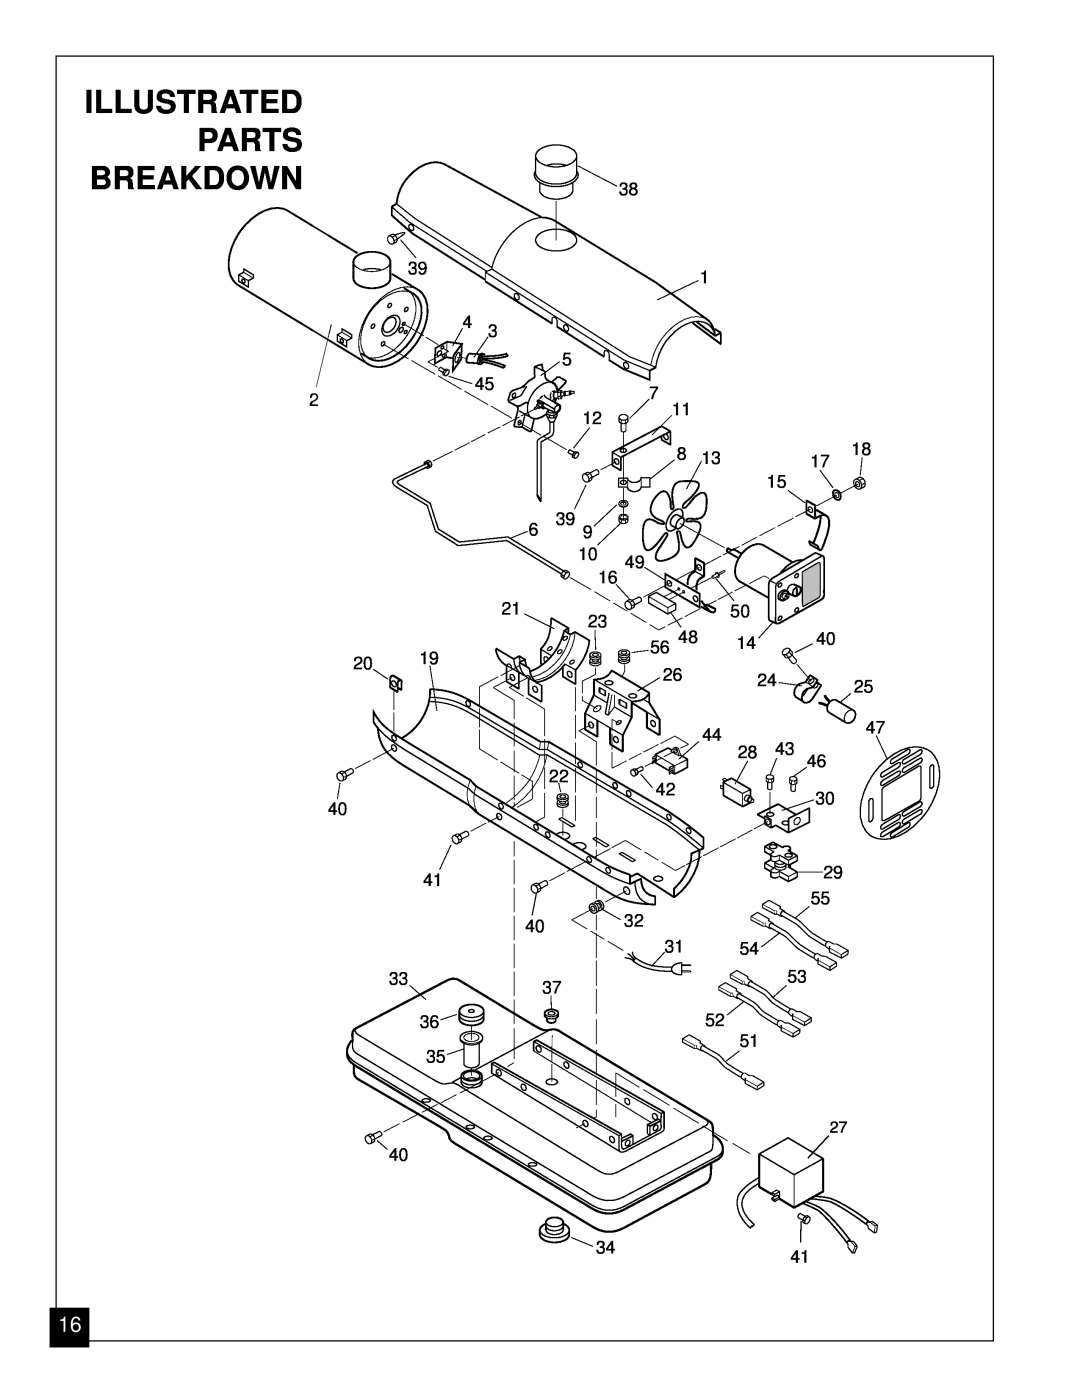 Desa RV125EDI owner manual Illustrated, Parts, Breakdown 